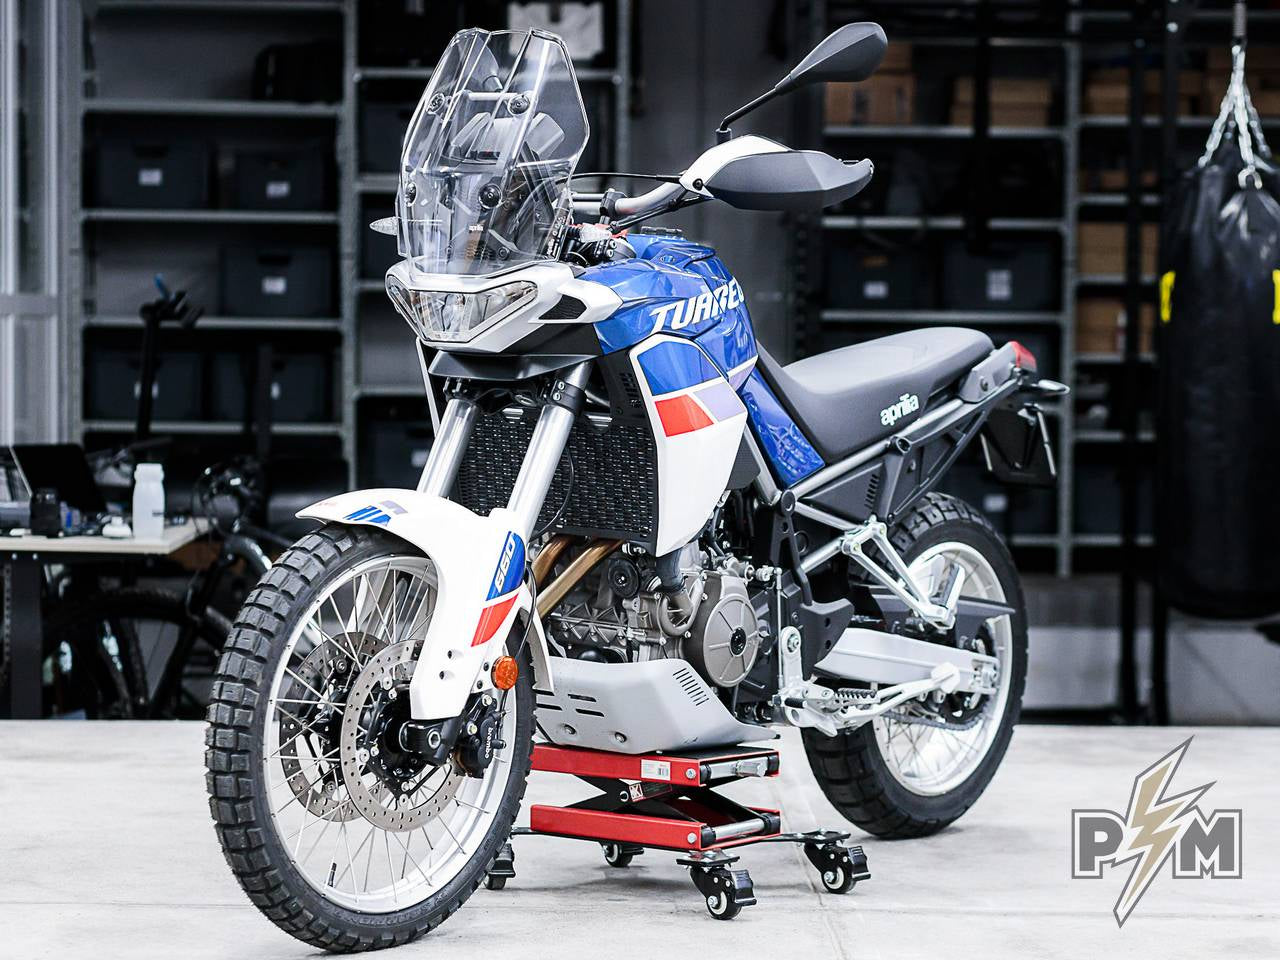 Aprilia Tuareg 660 - new Perun Moto project bike - Perunmoto